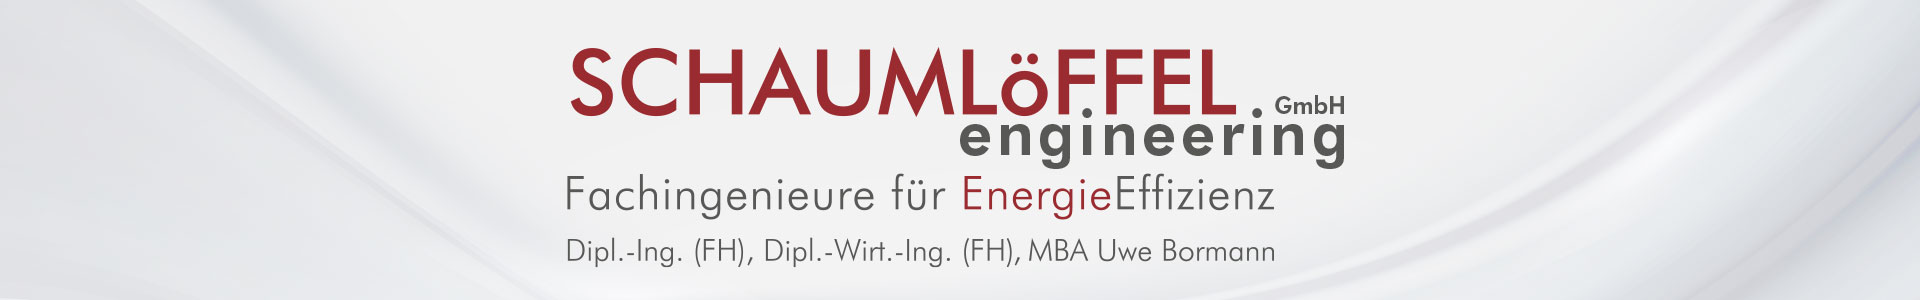 Schaumlöffel Engineering Logo